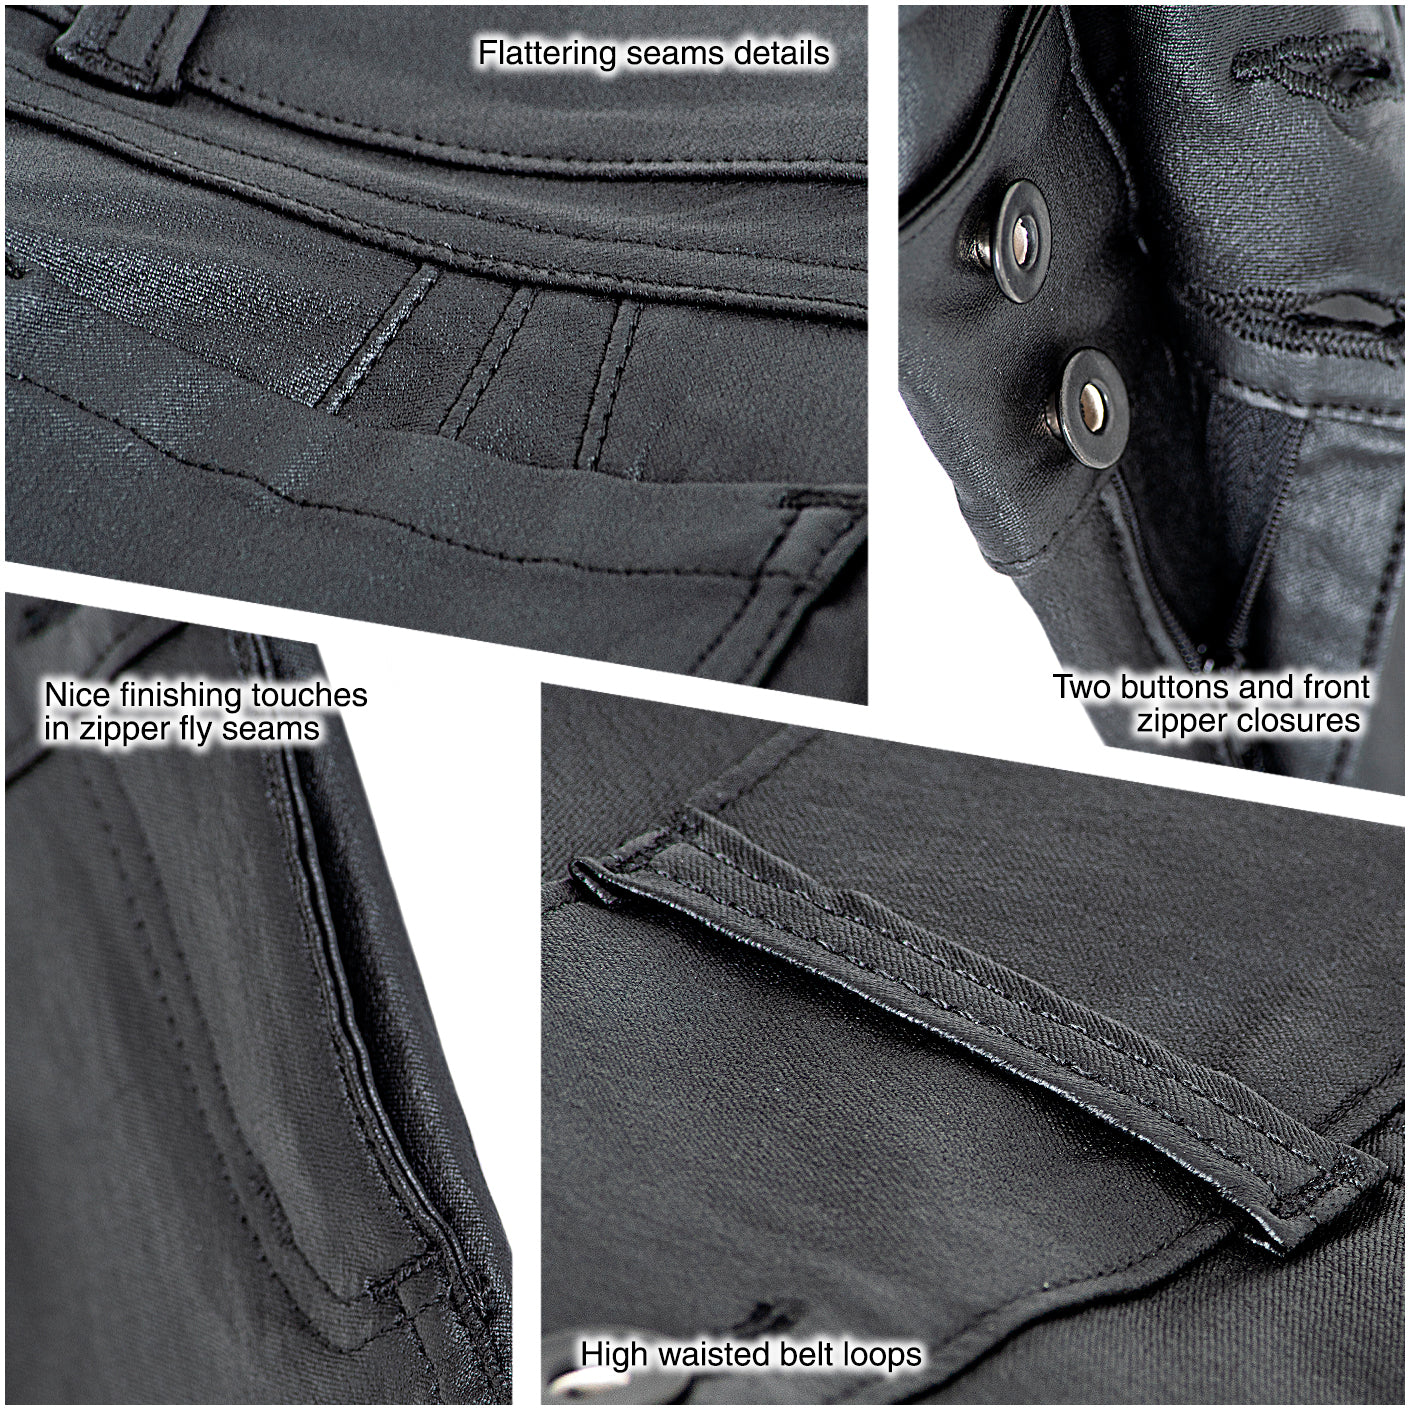 LOWLA 0719 - Mid Rise Faux Leather Jeans